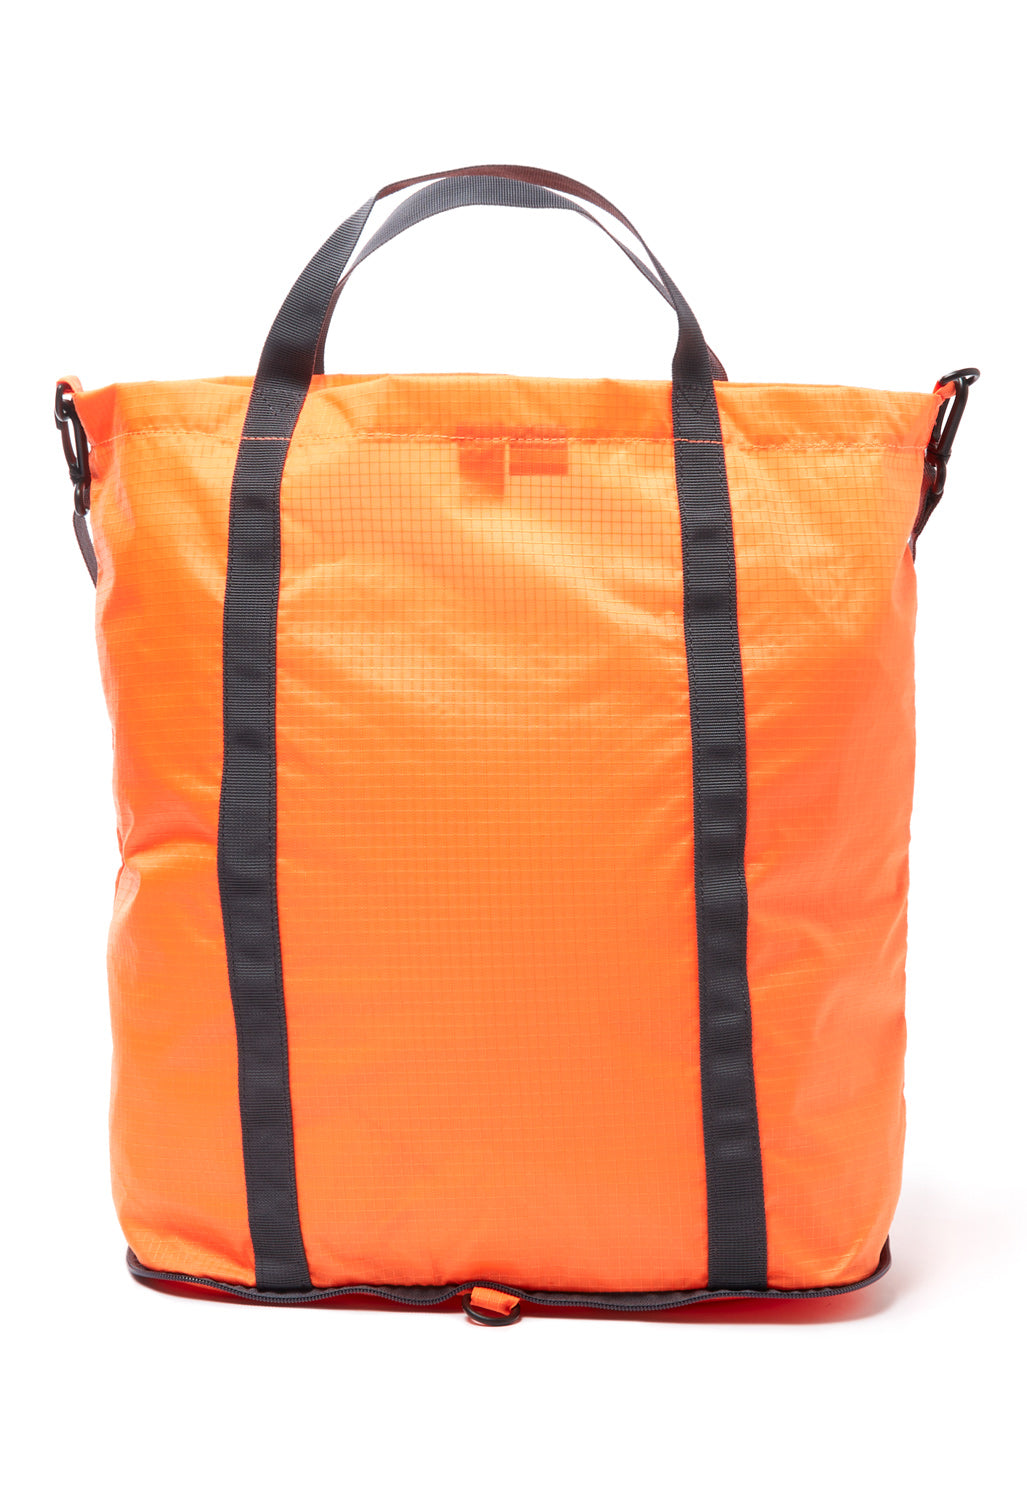 Madden Equipment Funny Tote Pack - Ripstop Orange